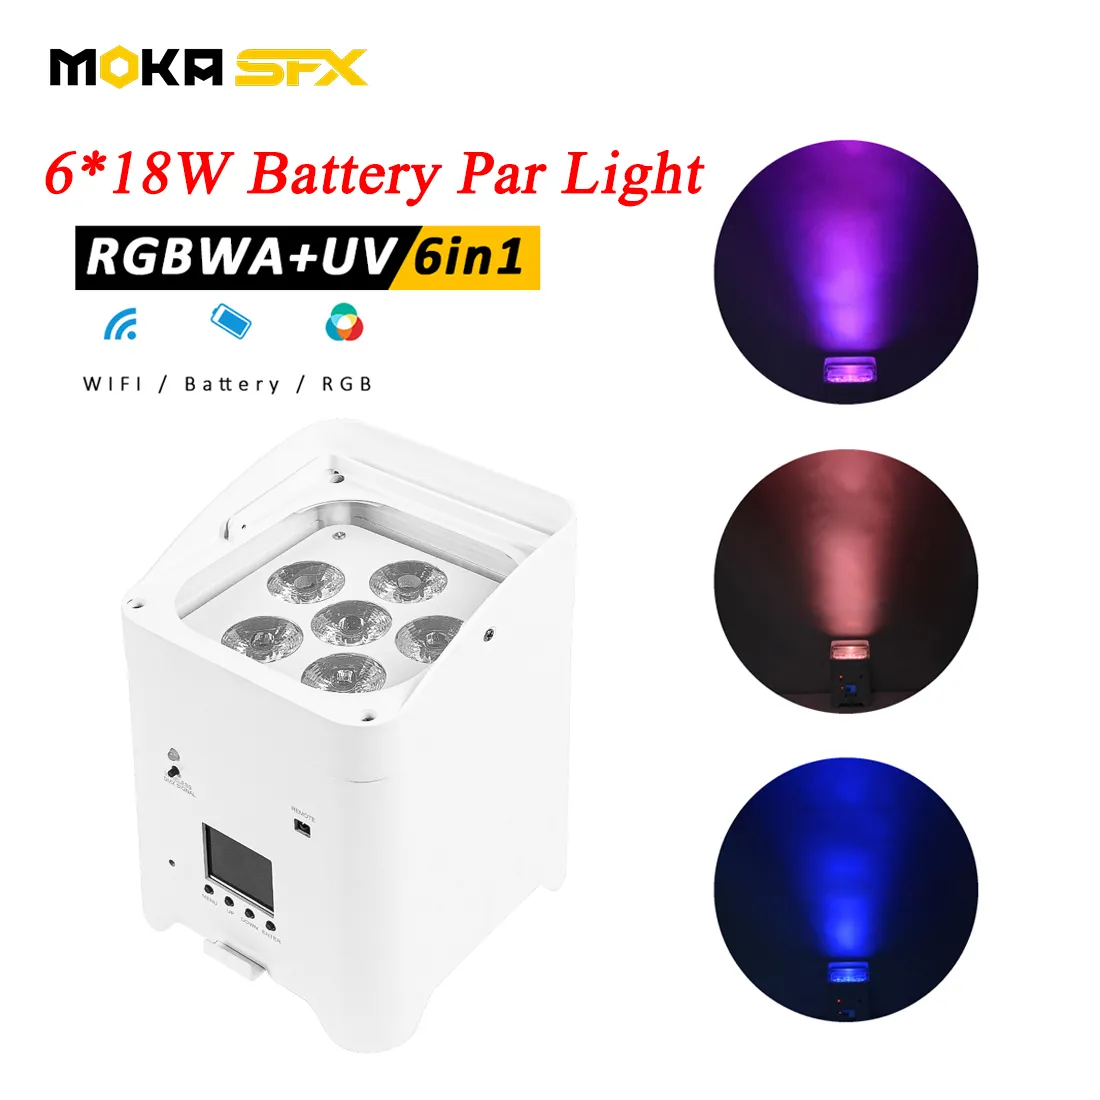 Battery Par Light LED 6x18W RGBWA+UV 6in1 Effects Wireless Uplight High Bright DJ Lights DMX512 APP Control for Disco Party Wedding DJ Club